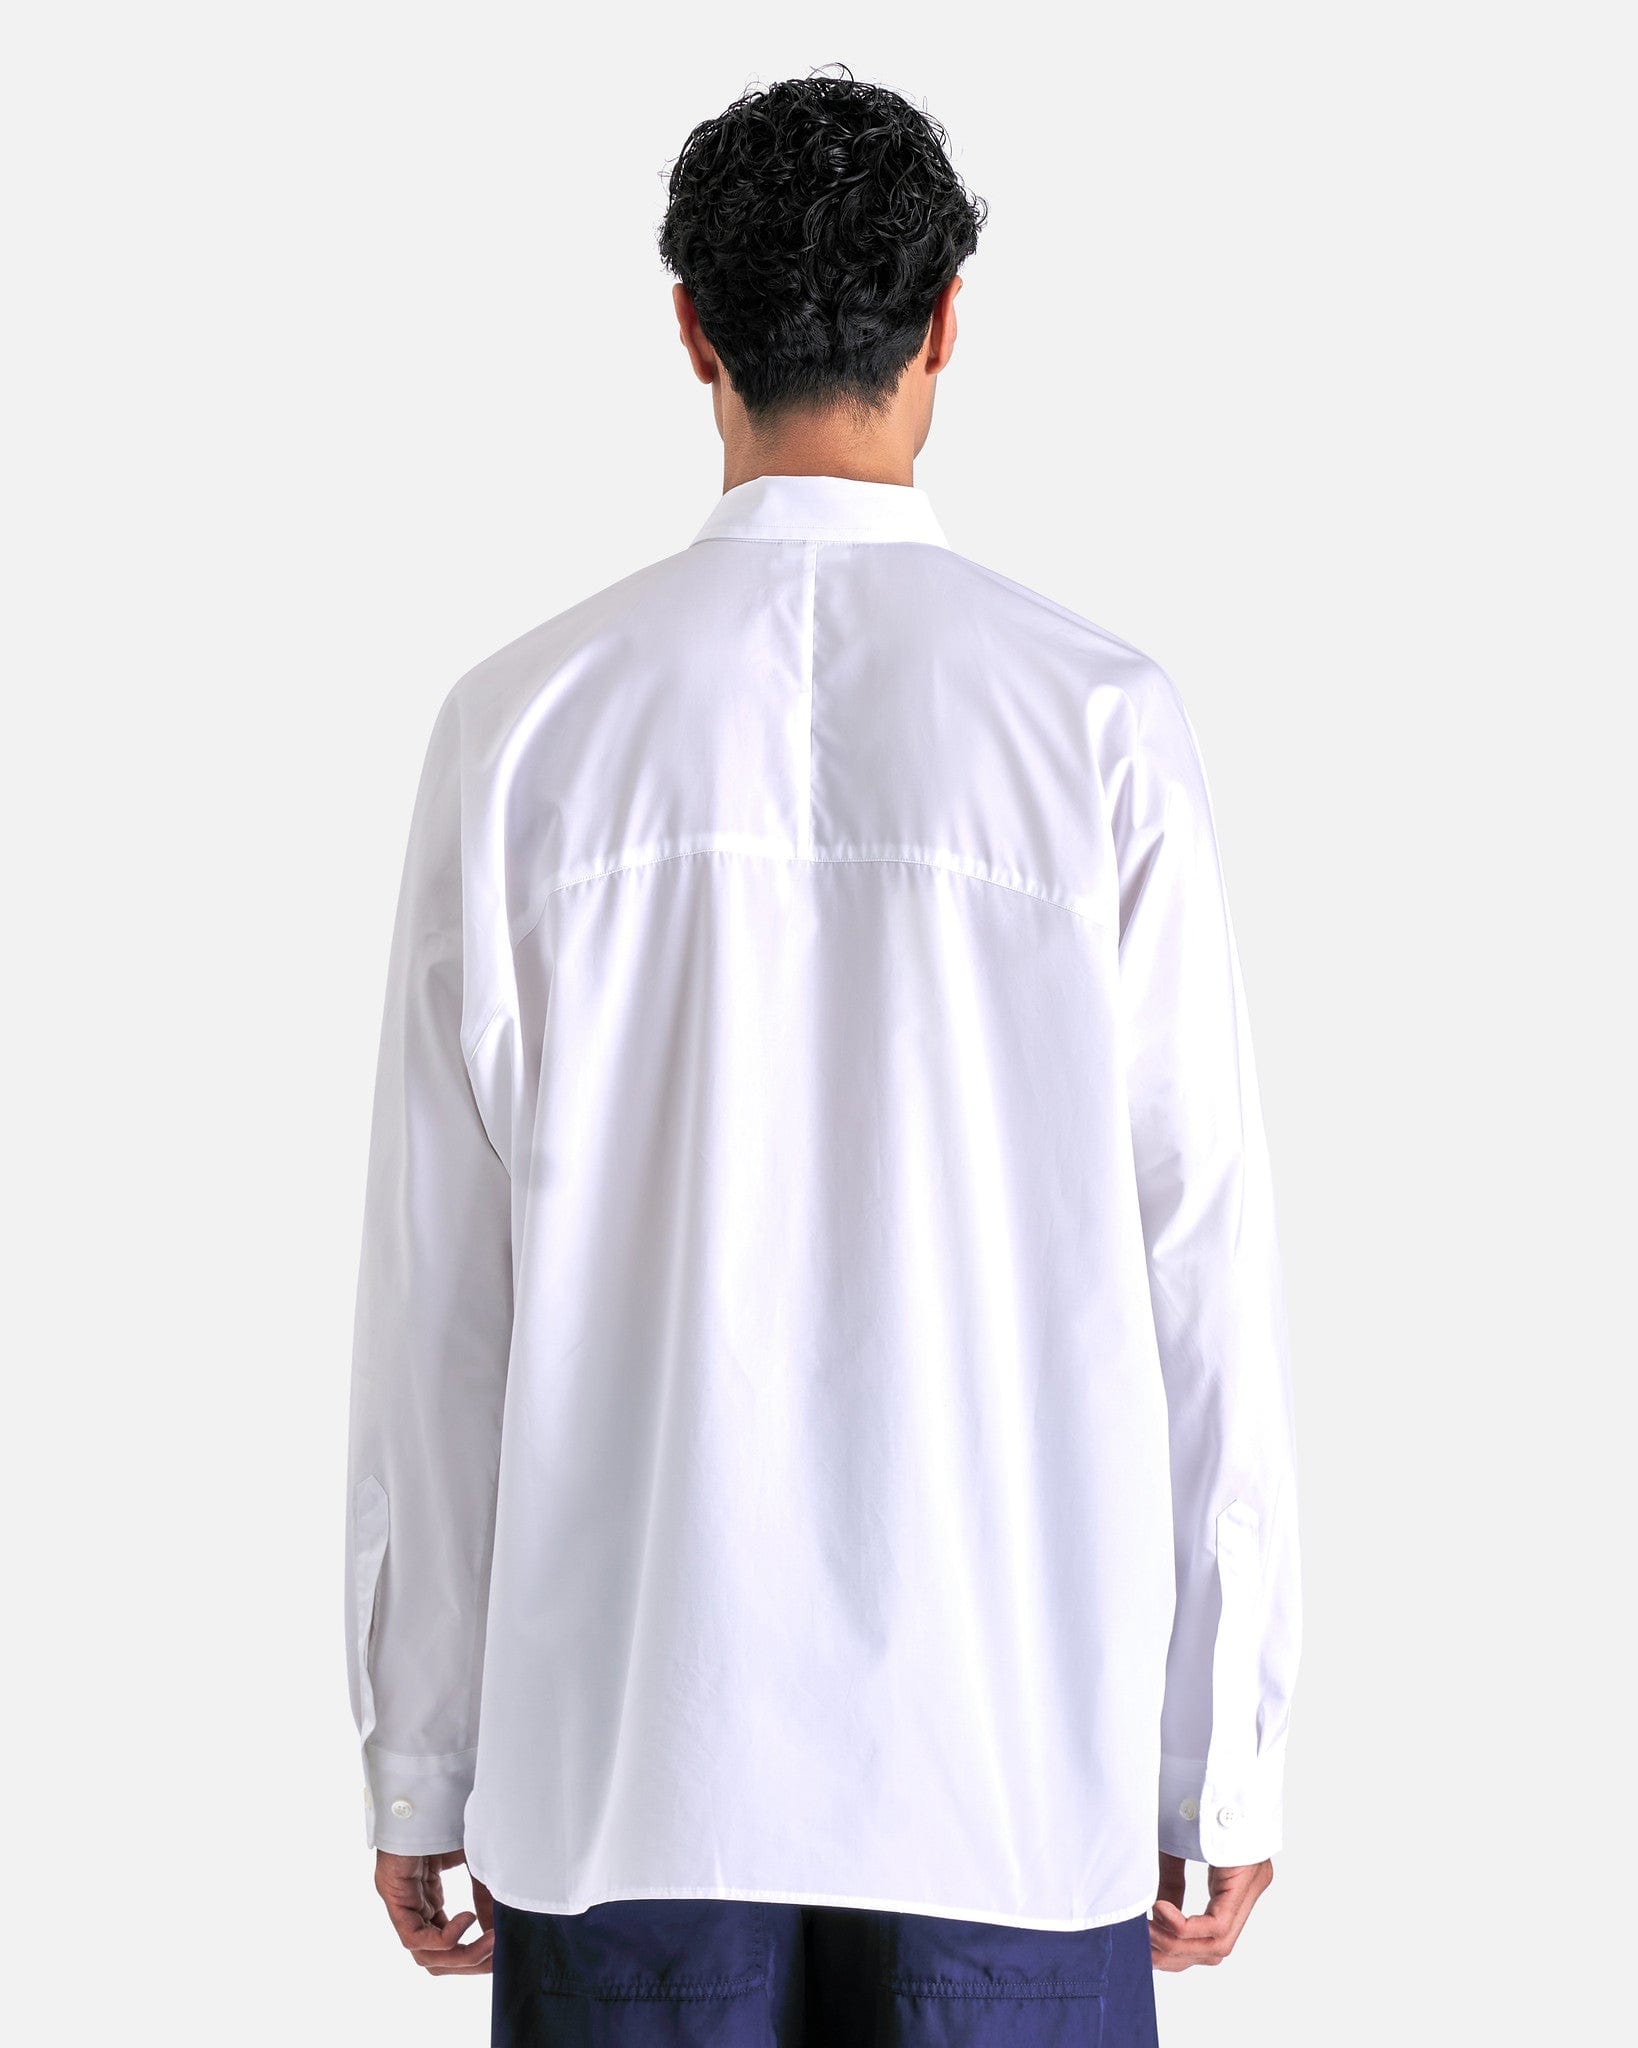 Dries Van Noten Men's Shirts Caraby Shirt in White